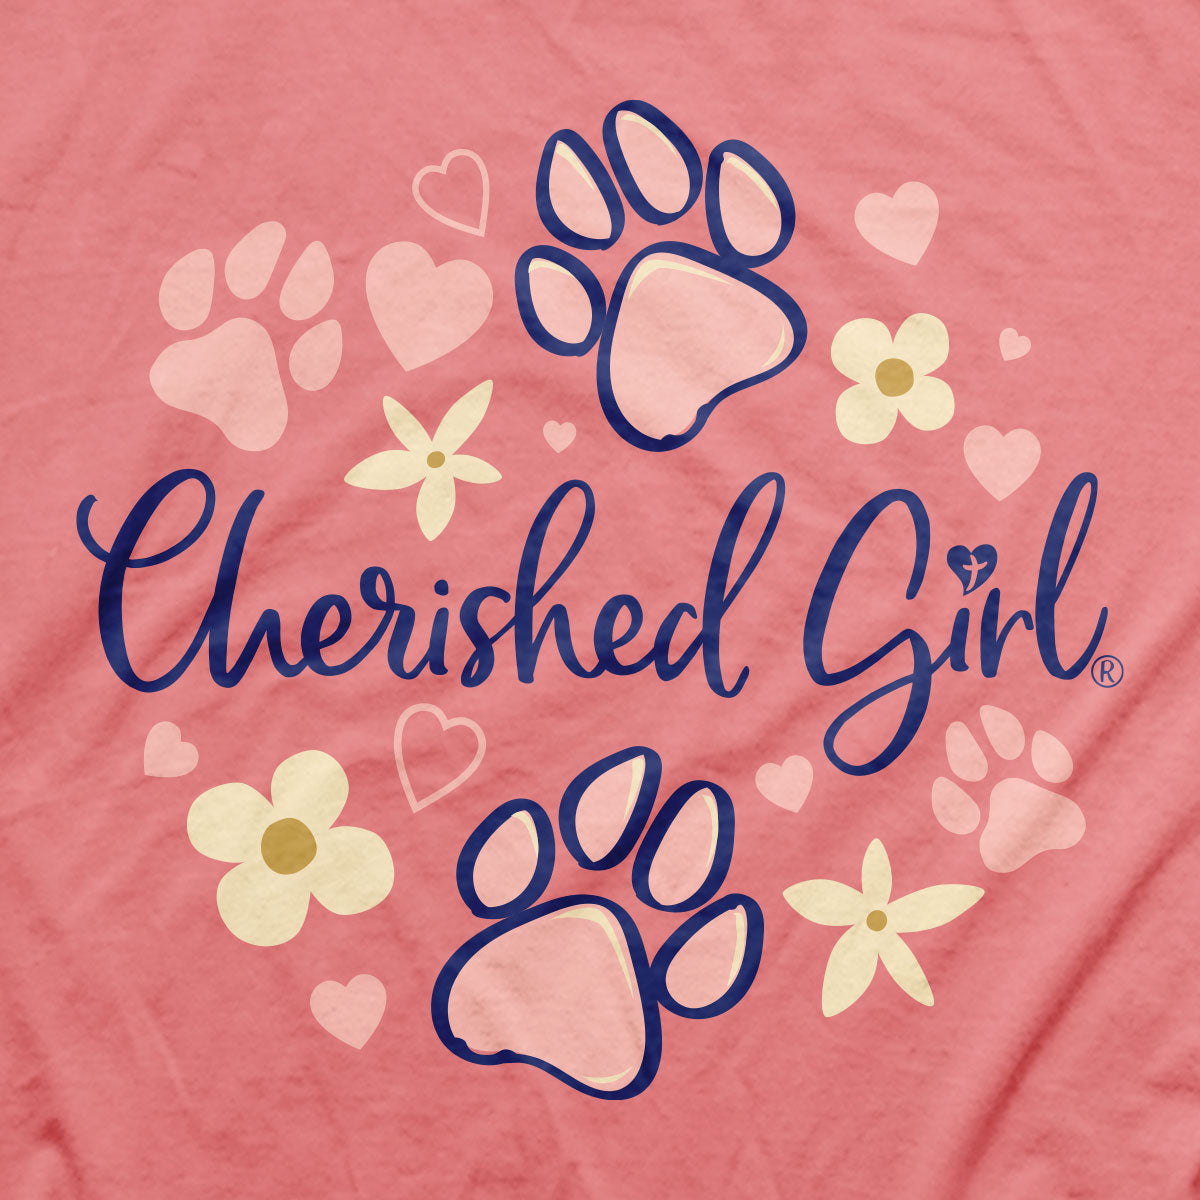 Cherished Girl Womens T-Shirt My Dog